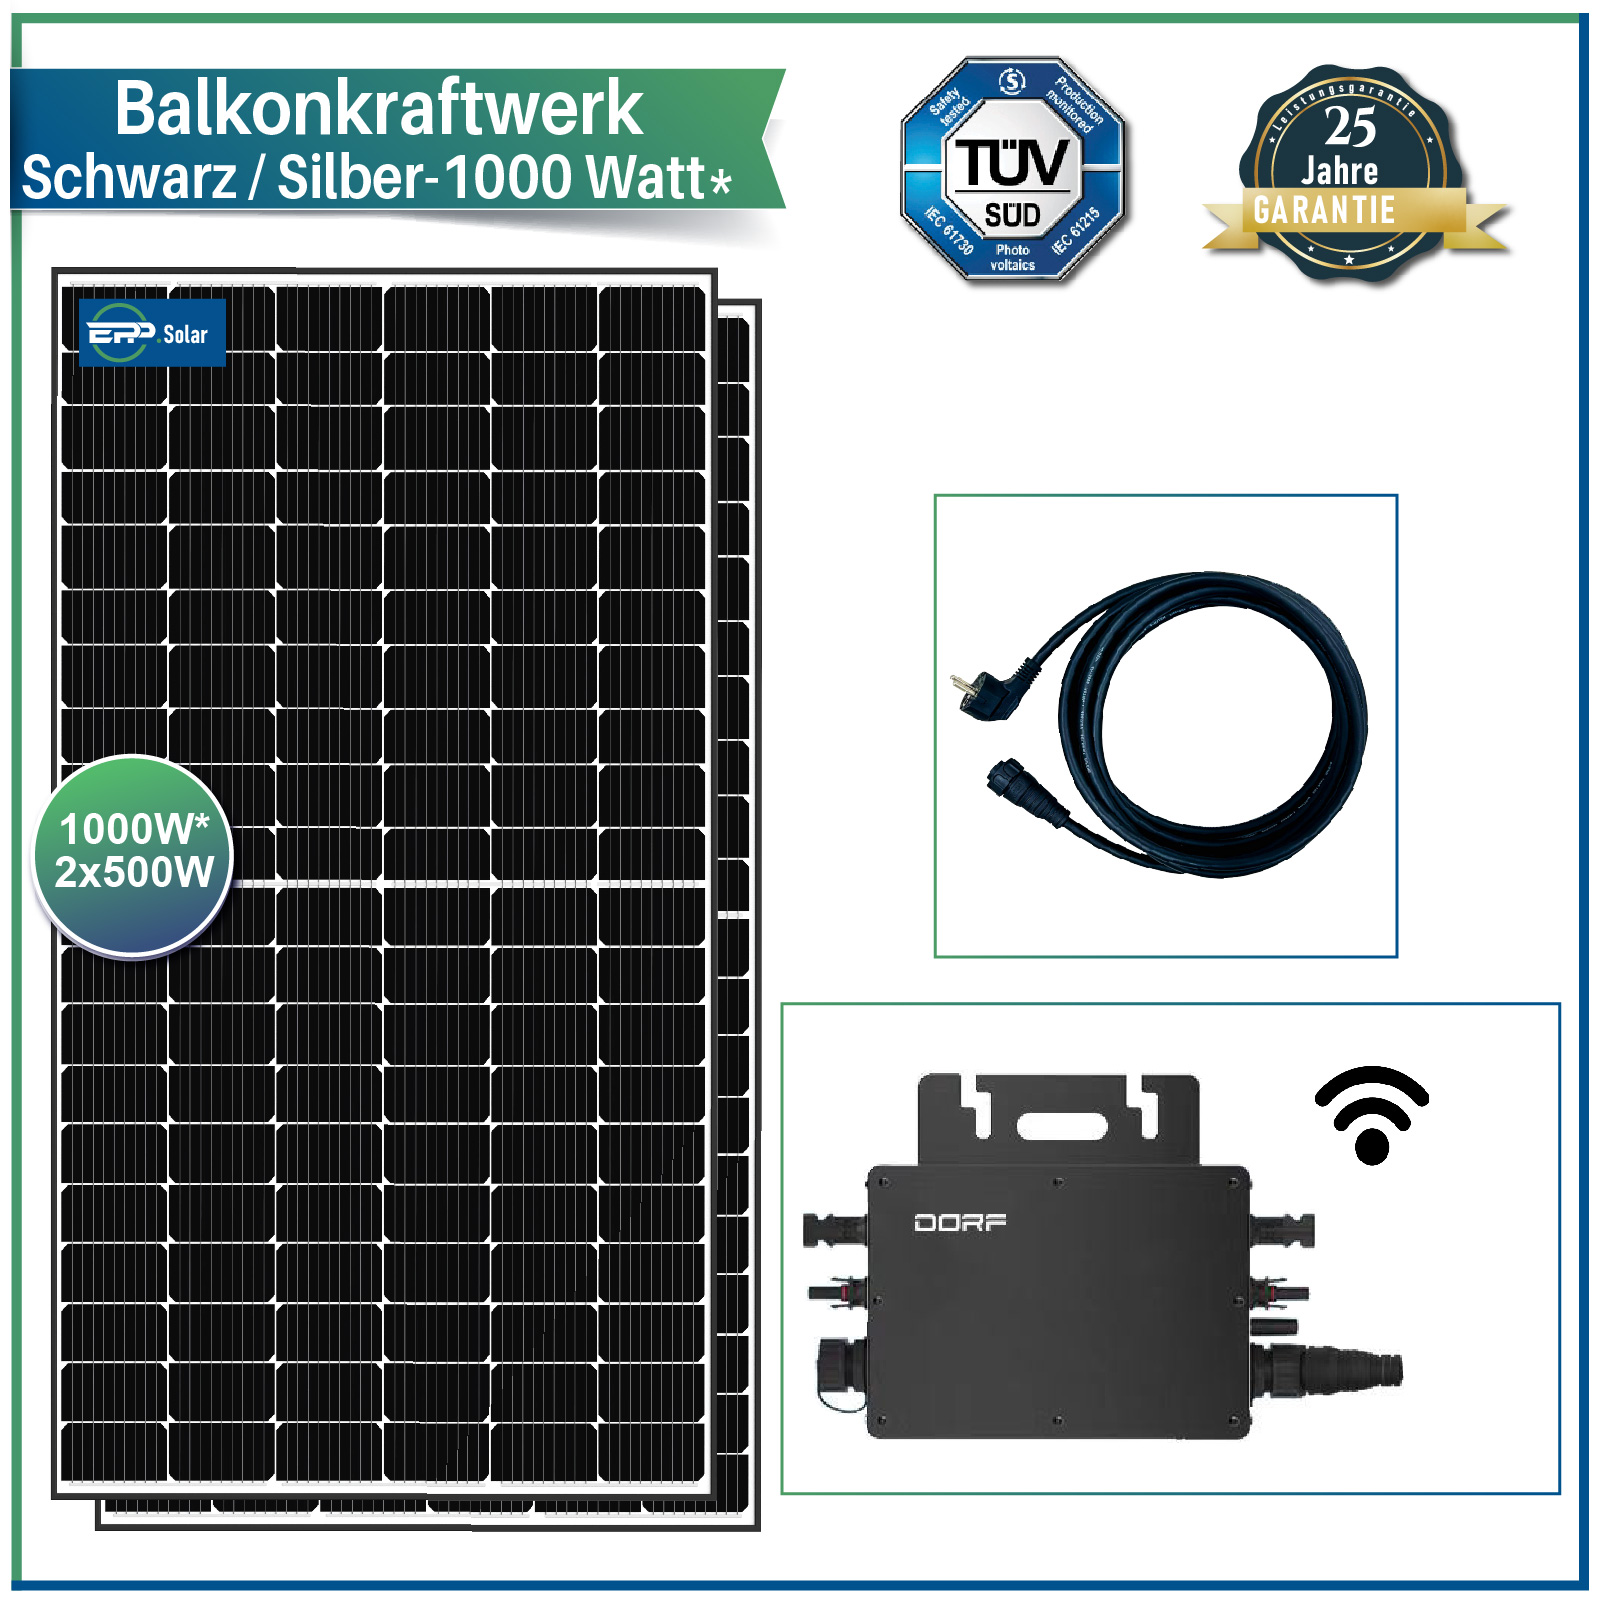 1000W / 800W Photovoltaik Balkonkraftwerk Upgradefähiger